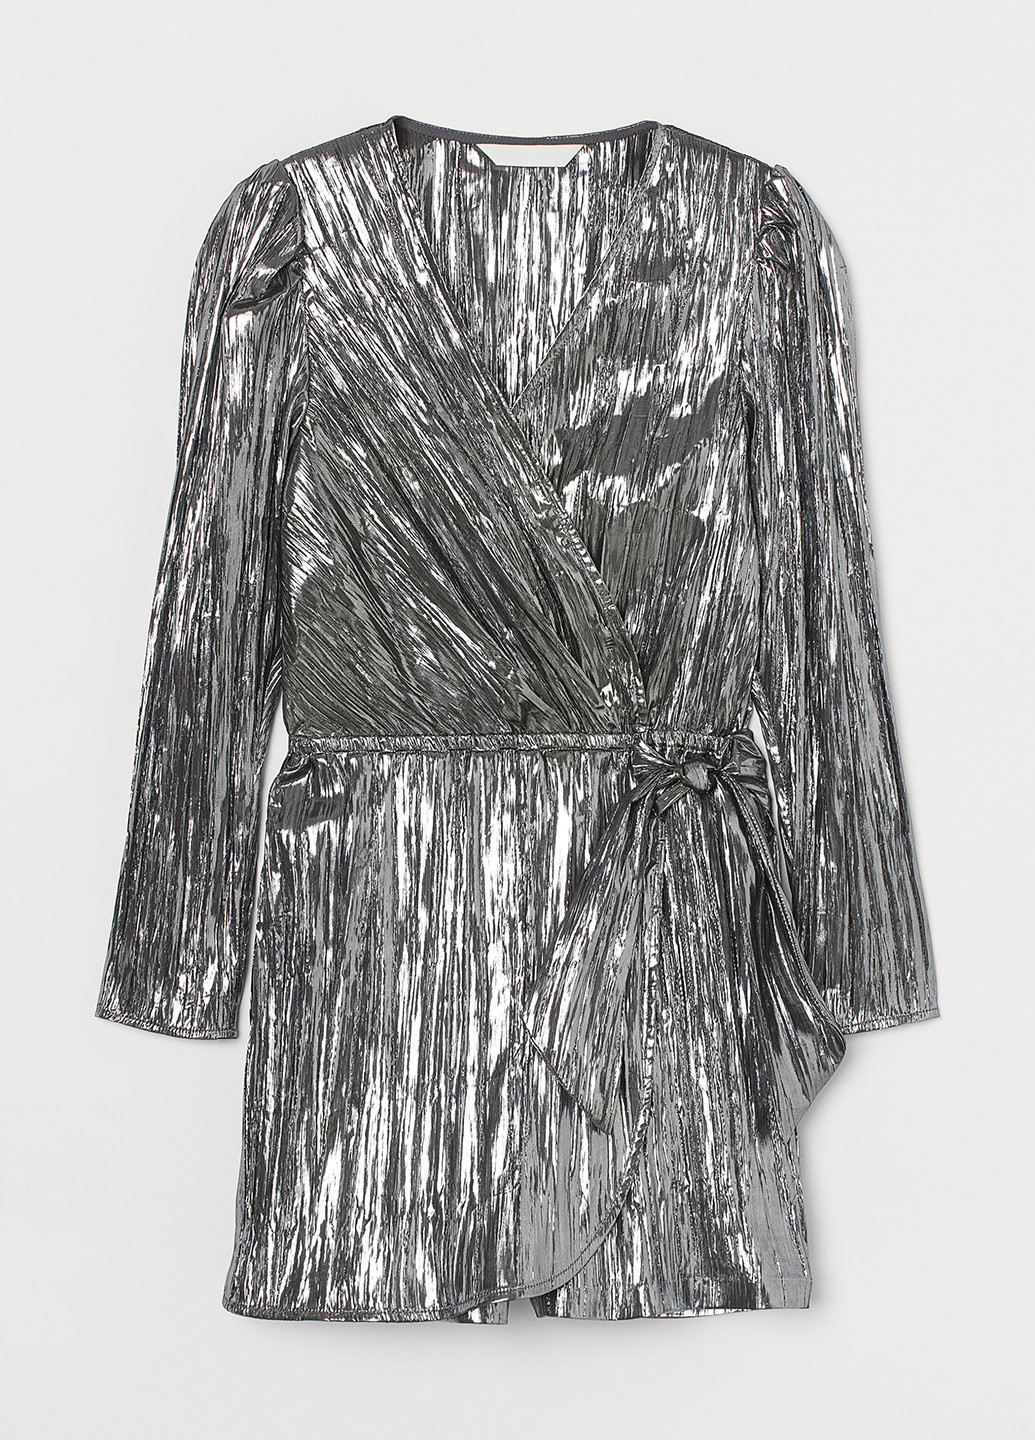 Комбинезон H&M комбинезон-шорты однотонный серебряный кэжуал полиамид